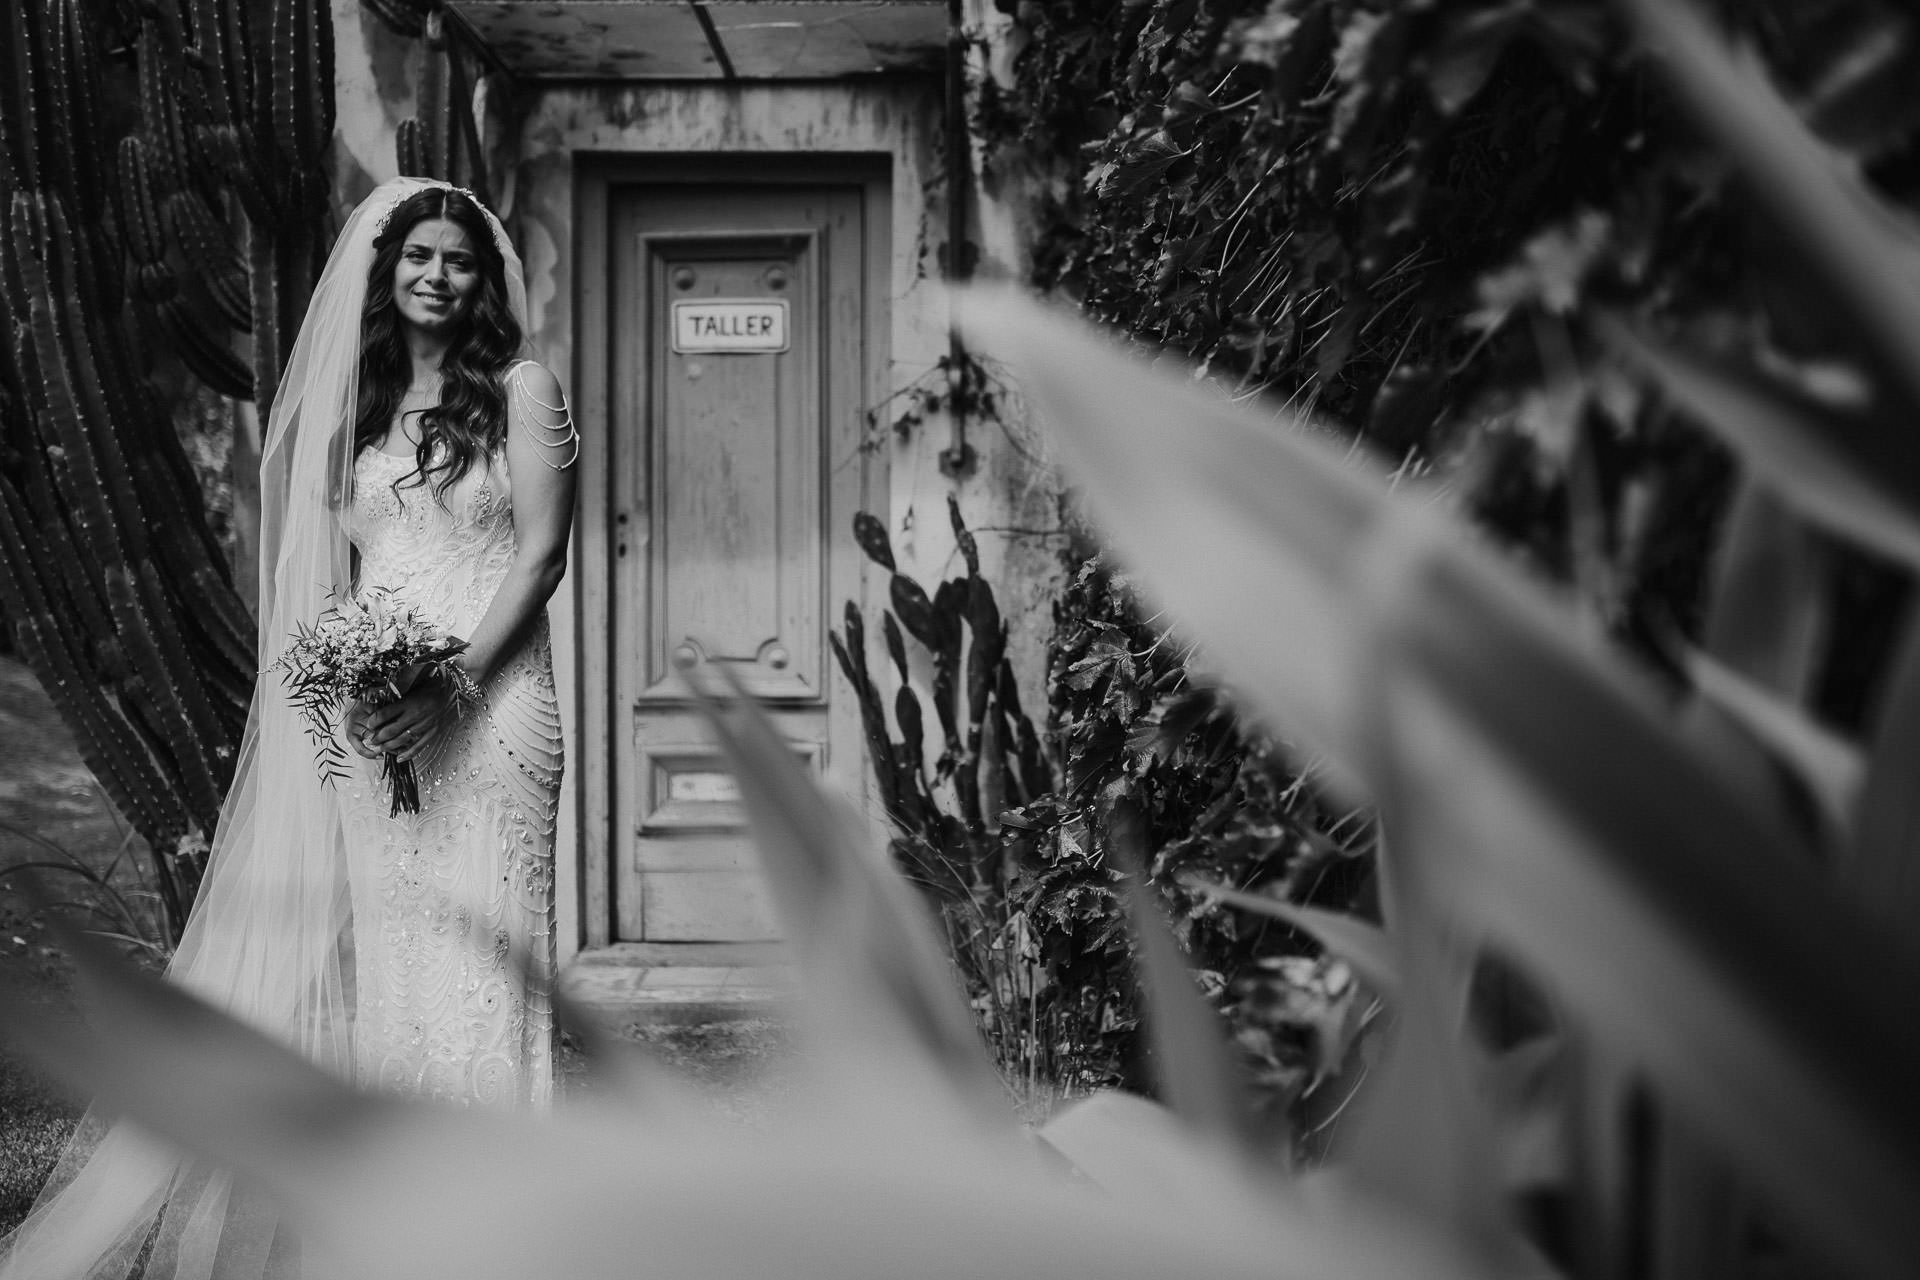 Boda en Campolobos, vestido de novia, fotógrafo de bodas, Norman Parunov